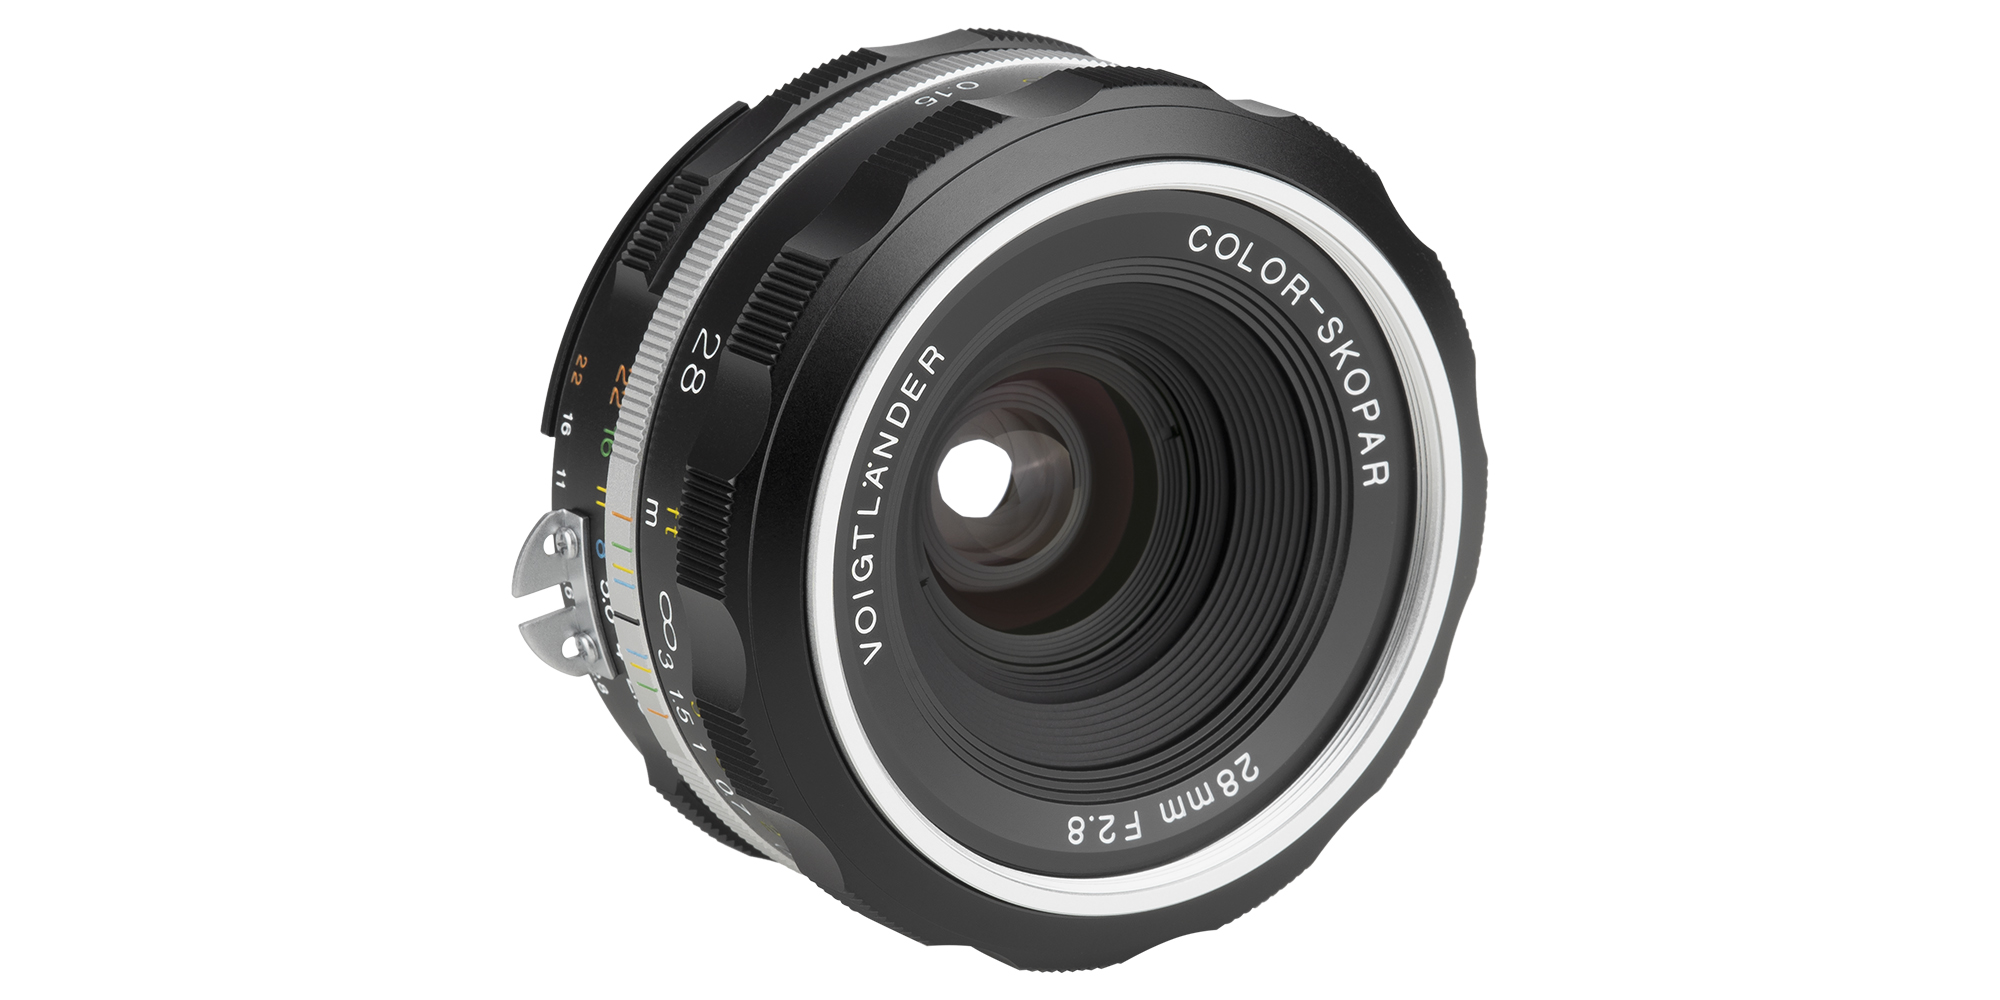 Voigtlander Color Skopar SL IIs 28mm f/2.8 lens for Nikon F - Silver - Smooth control of light